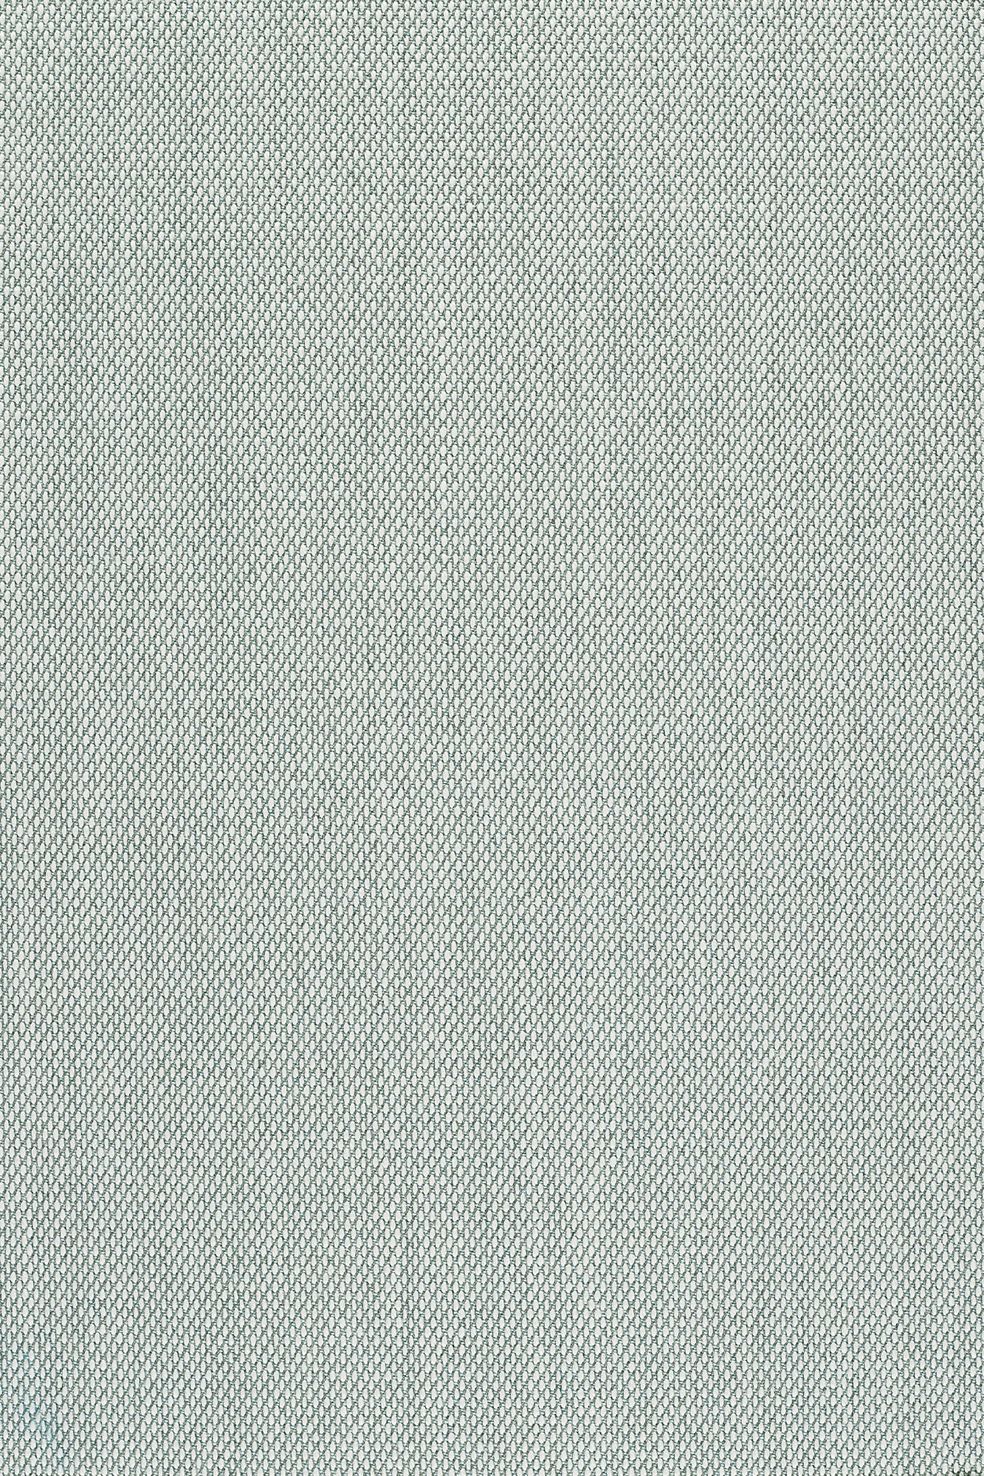 Fabric sample Steelcut Trio 3 113 green